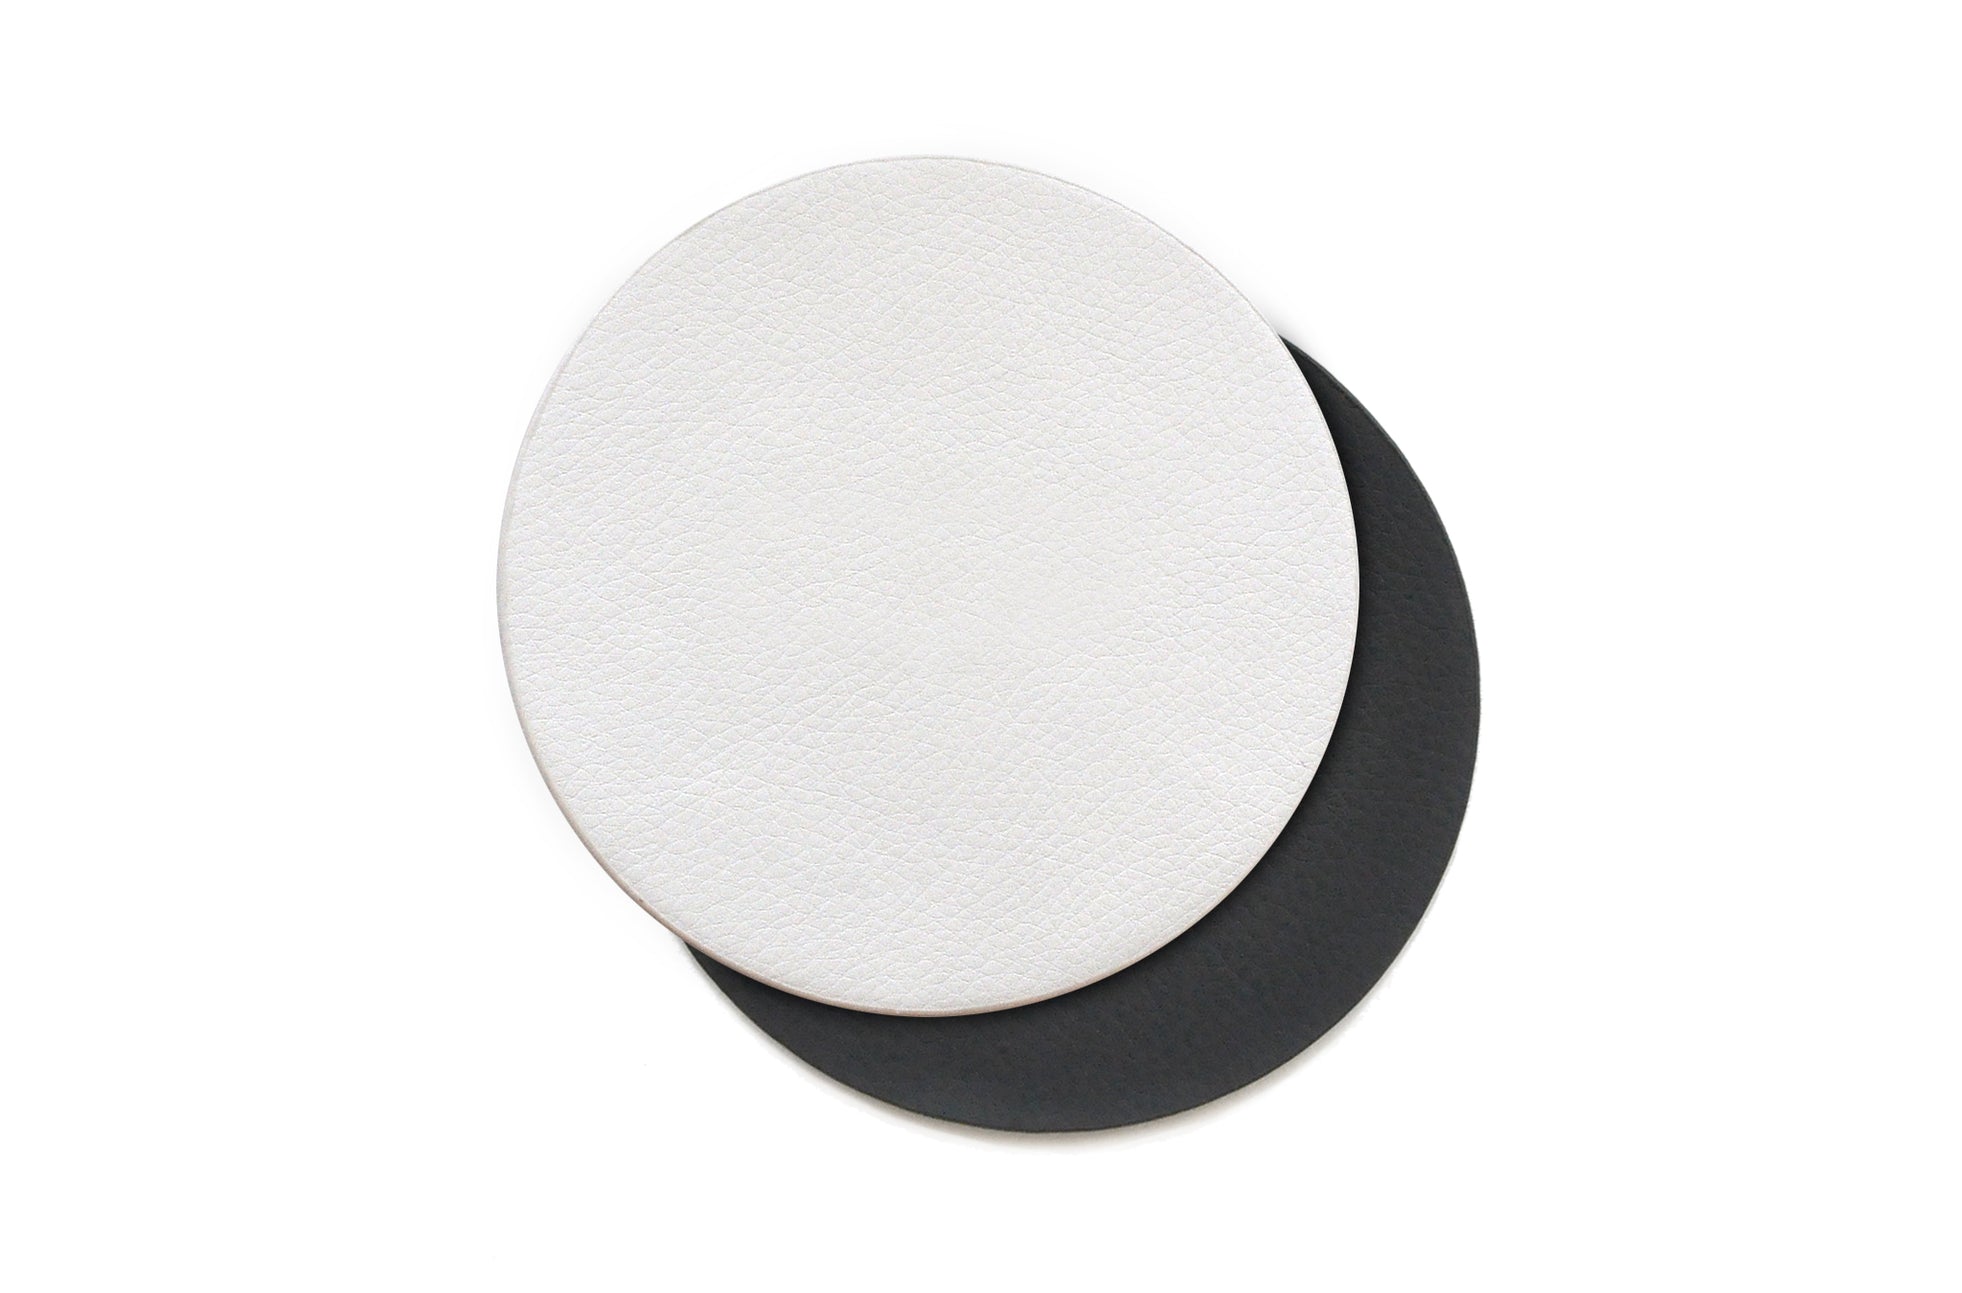 The Coaster Set - Sample Sale in Technik-Leather in Black & White image 1